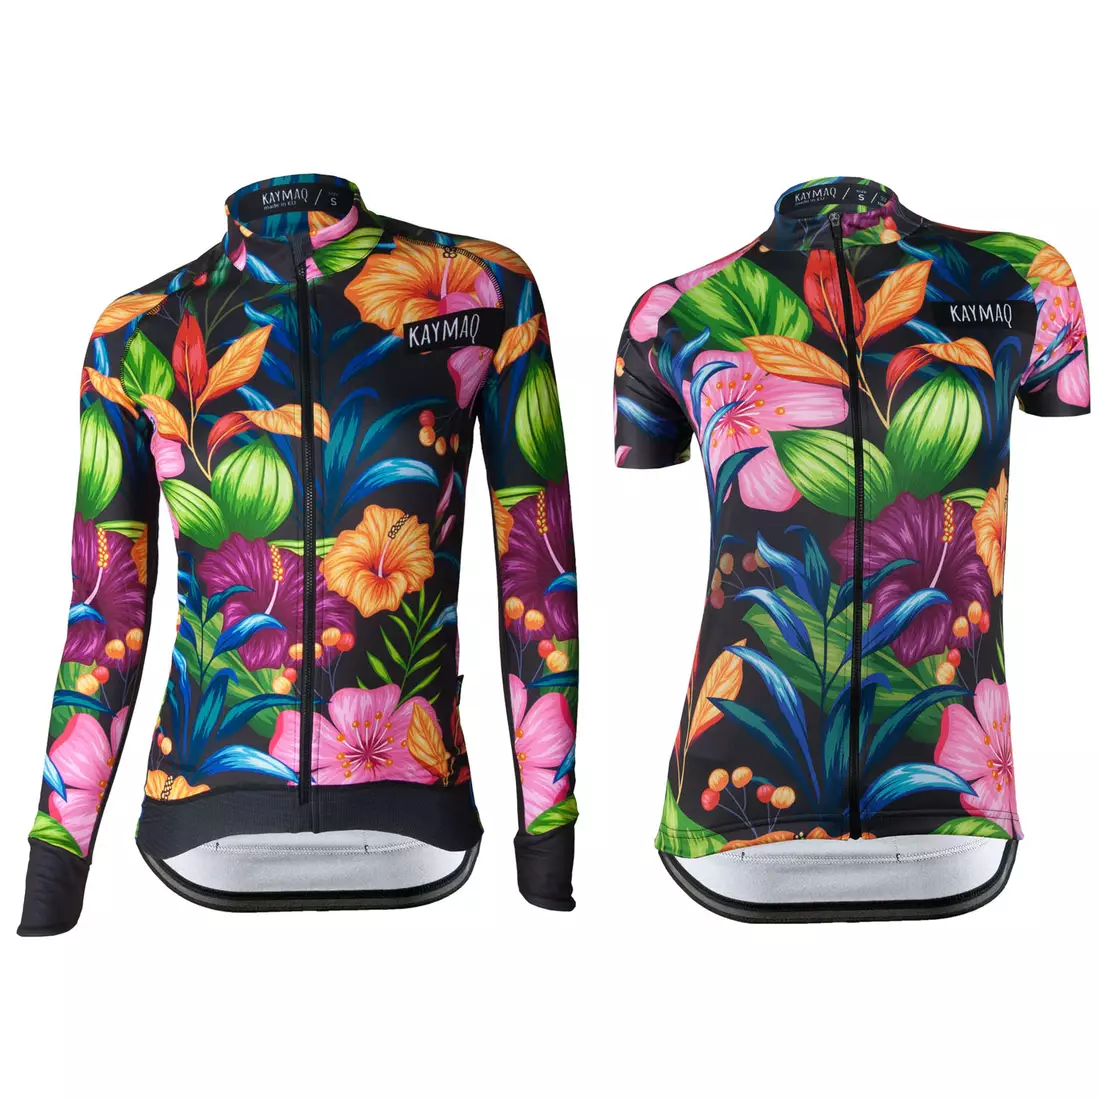 [Set] KAYMAQ DESIGN dámský cyklistický dres s krátkým rukávem W14  + KAYMAQ DESIGN dámský cyklistický dresW14 